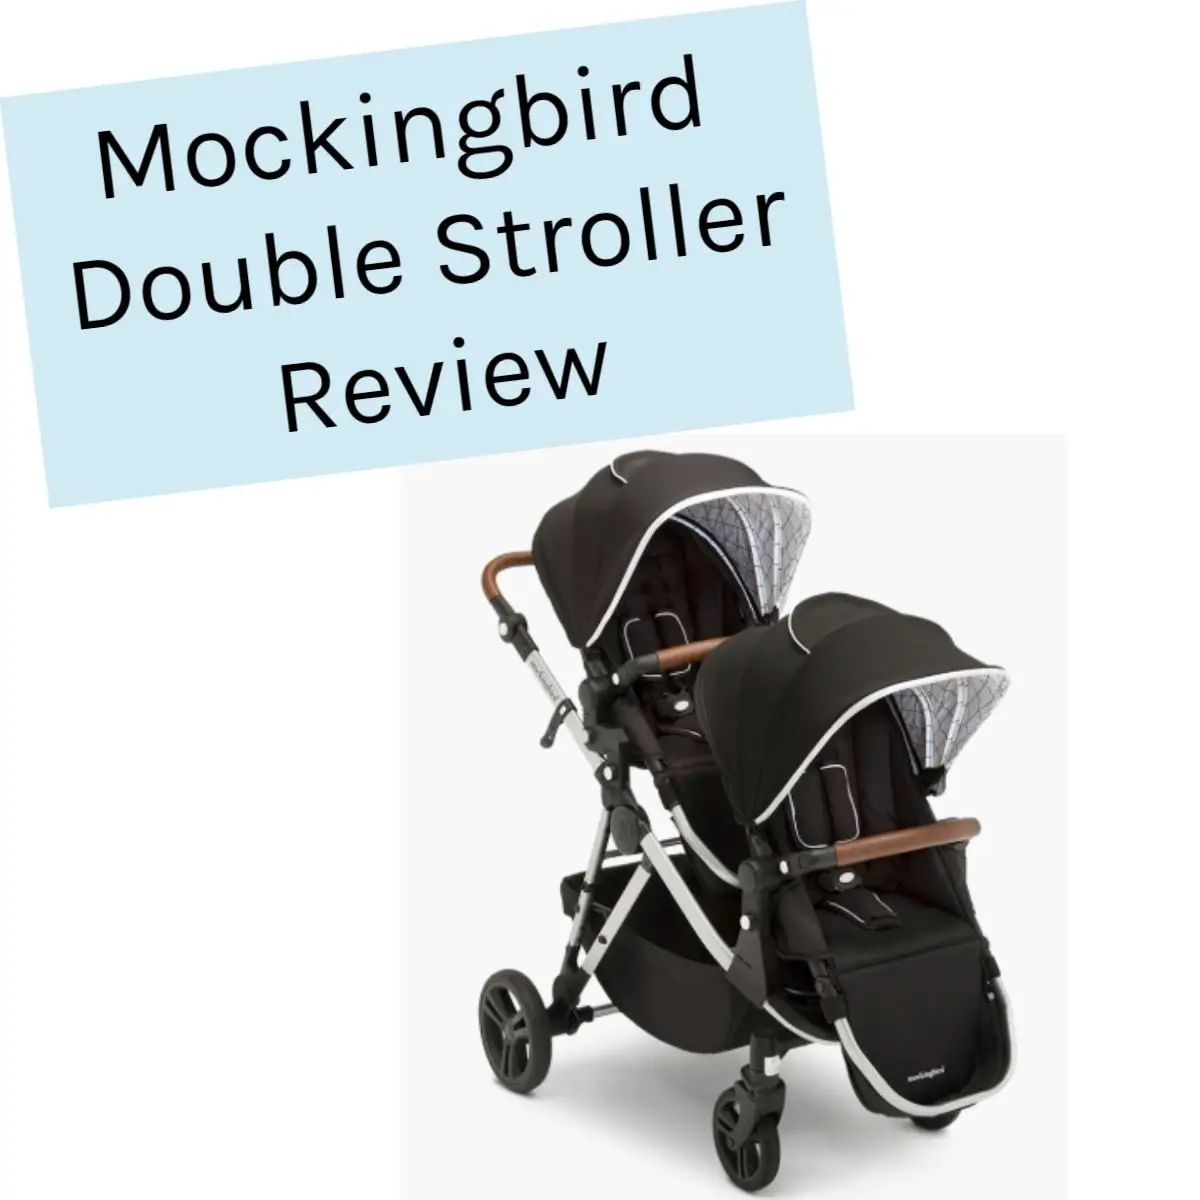 Mockingbird Double Stroller Review